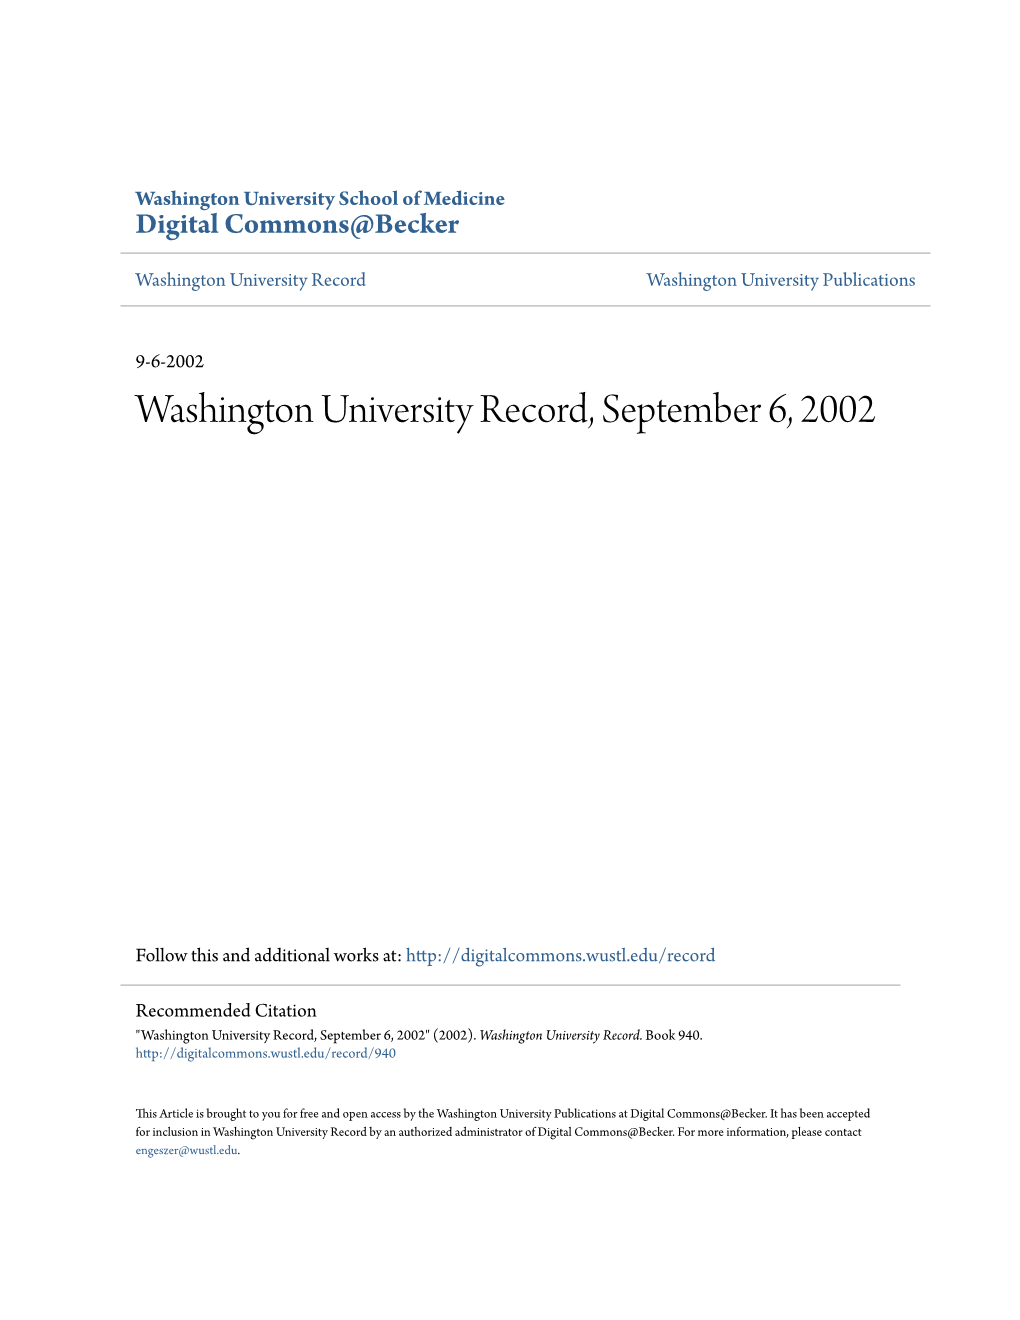 Washington University Record, September 6, 2002